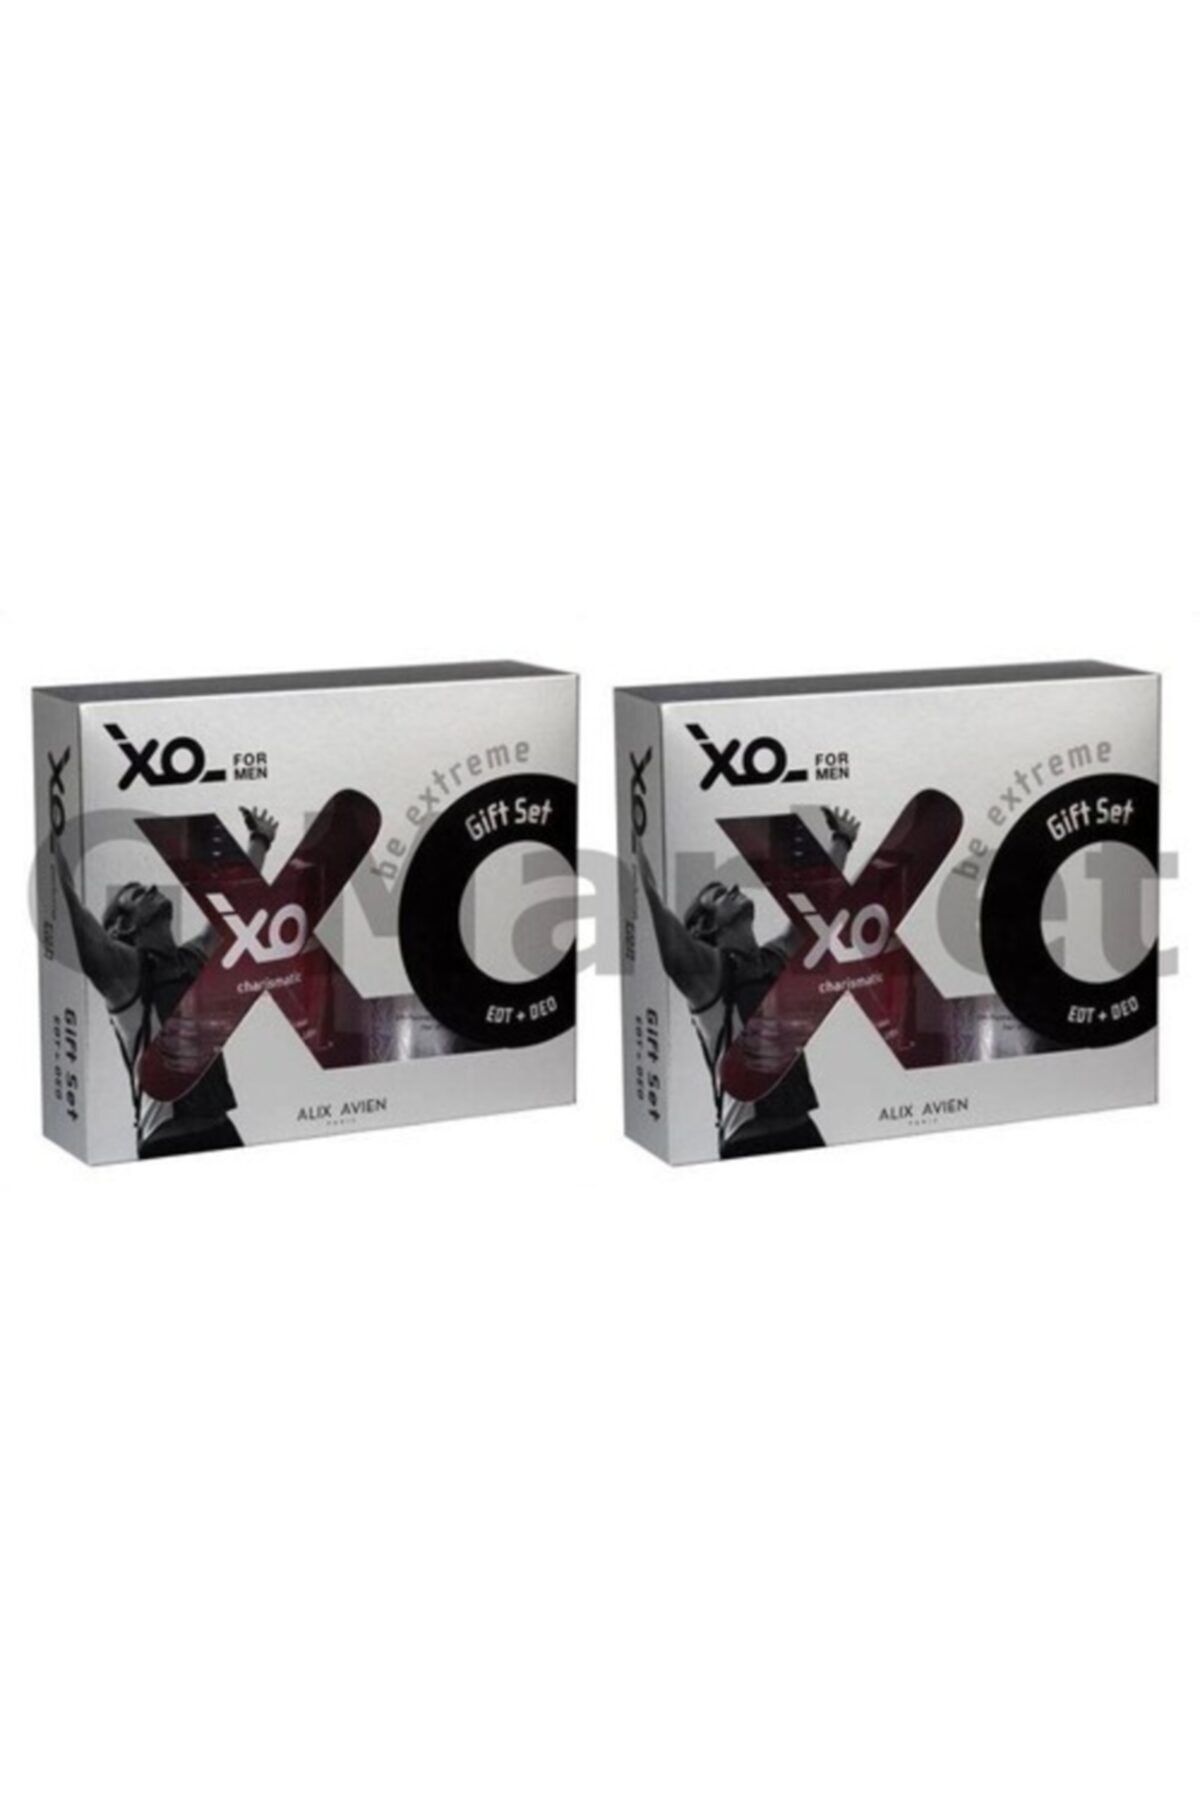 Alix Avien Xo Charismatic Edt 100 ml Erkek Parfüm Set 66906056626912 Adet